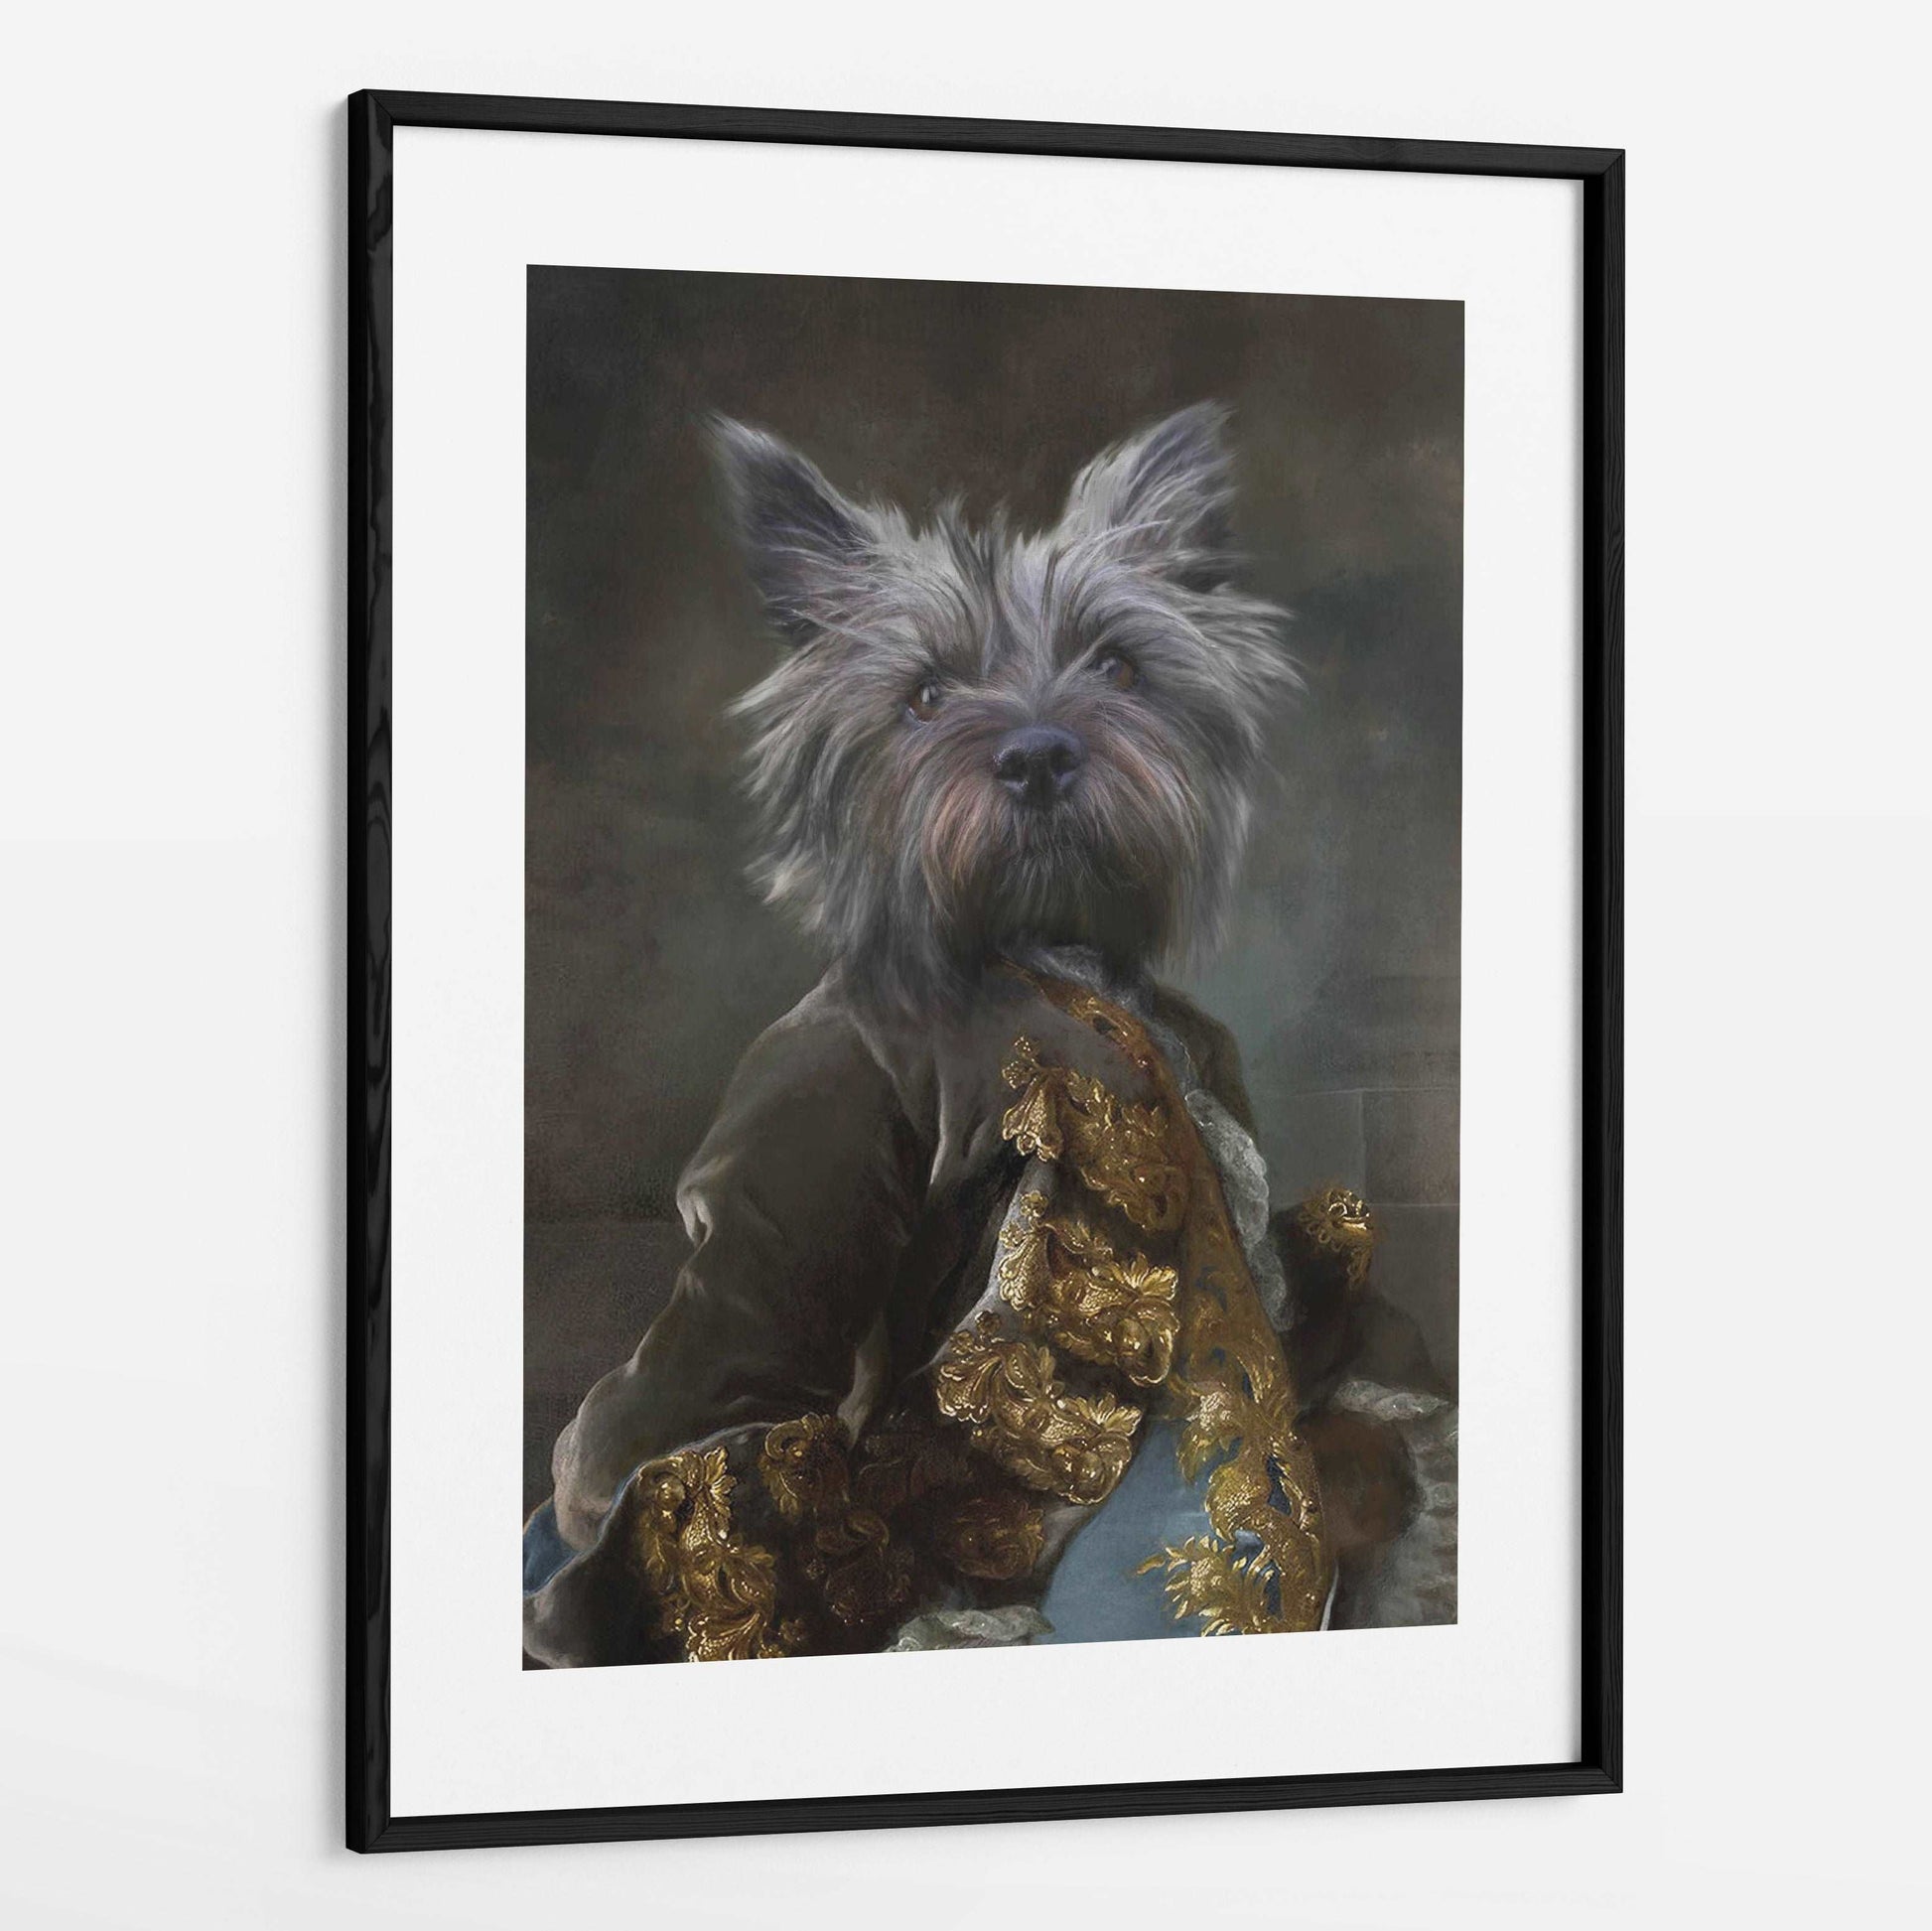 Dandy - Custom Royal Pet Portrait Framed